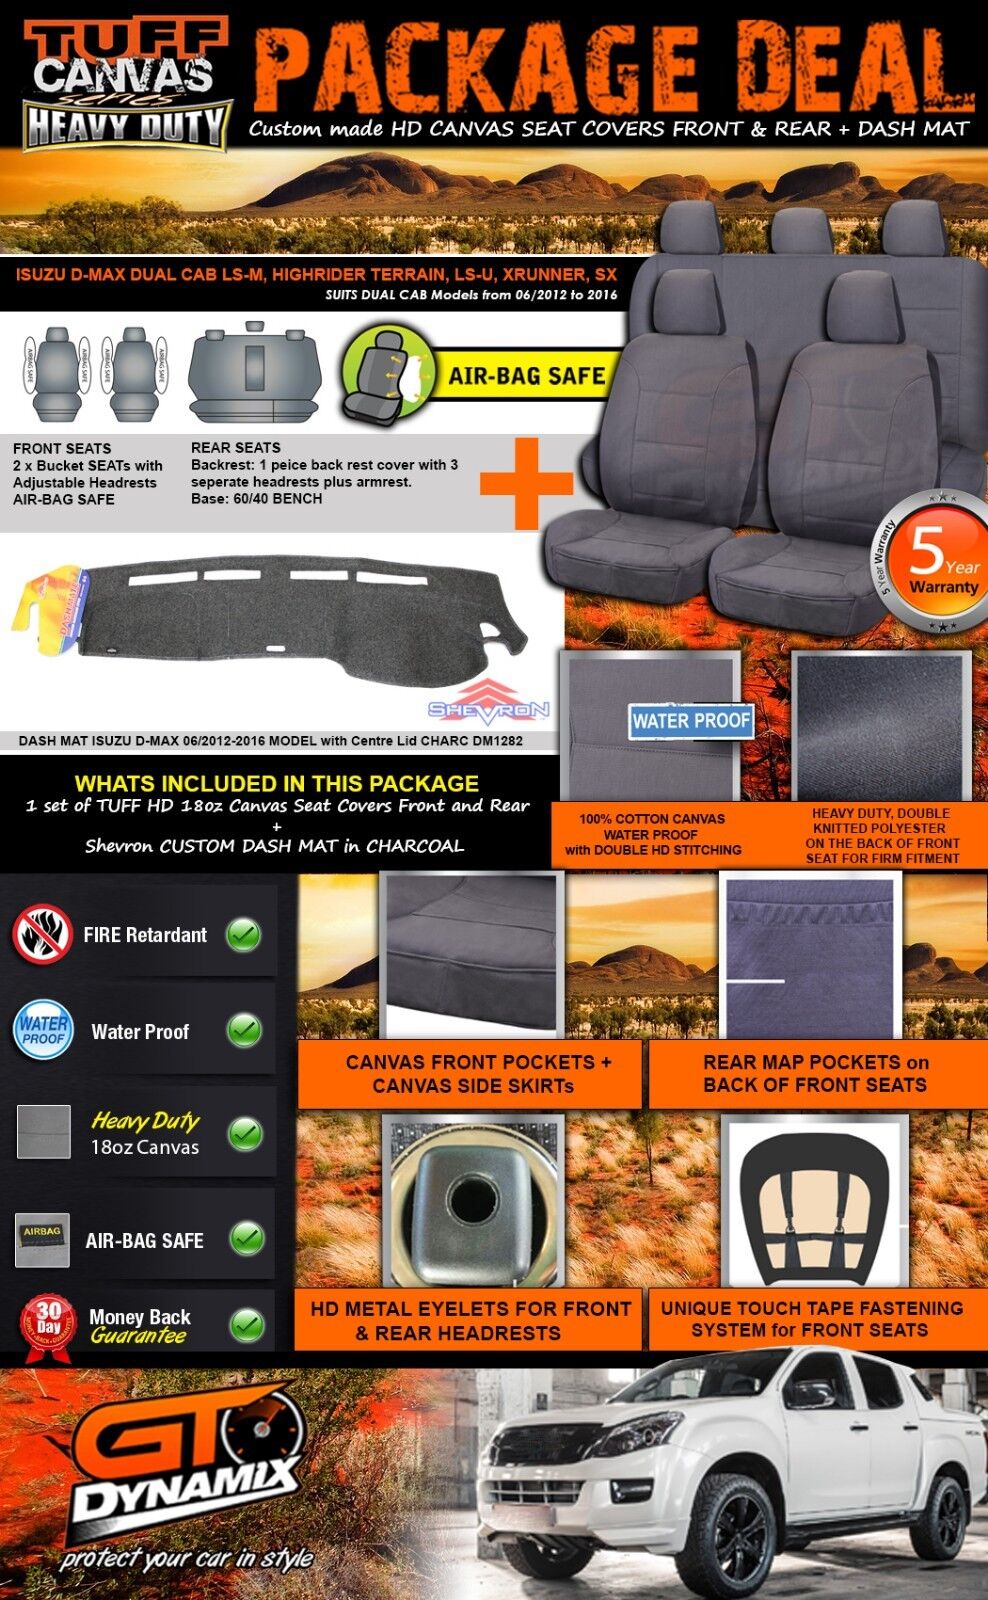 Tuff HD Canvas Seat Covers 2 Rows + Dash Mat For Isuzu D-MAX Dual Cab 6/2012-19 Charcoal